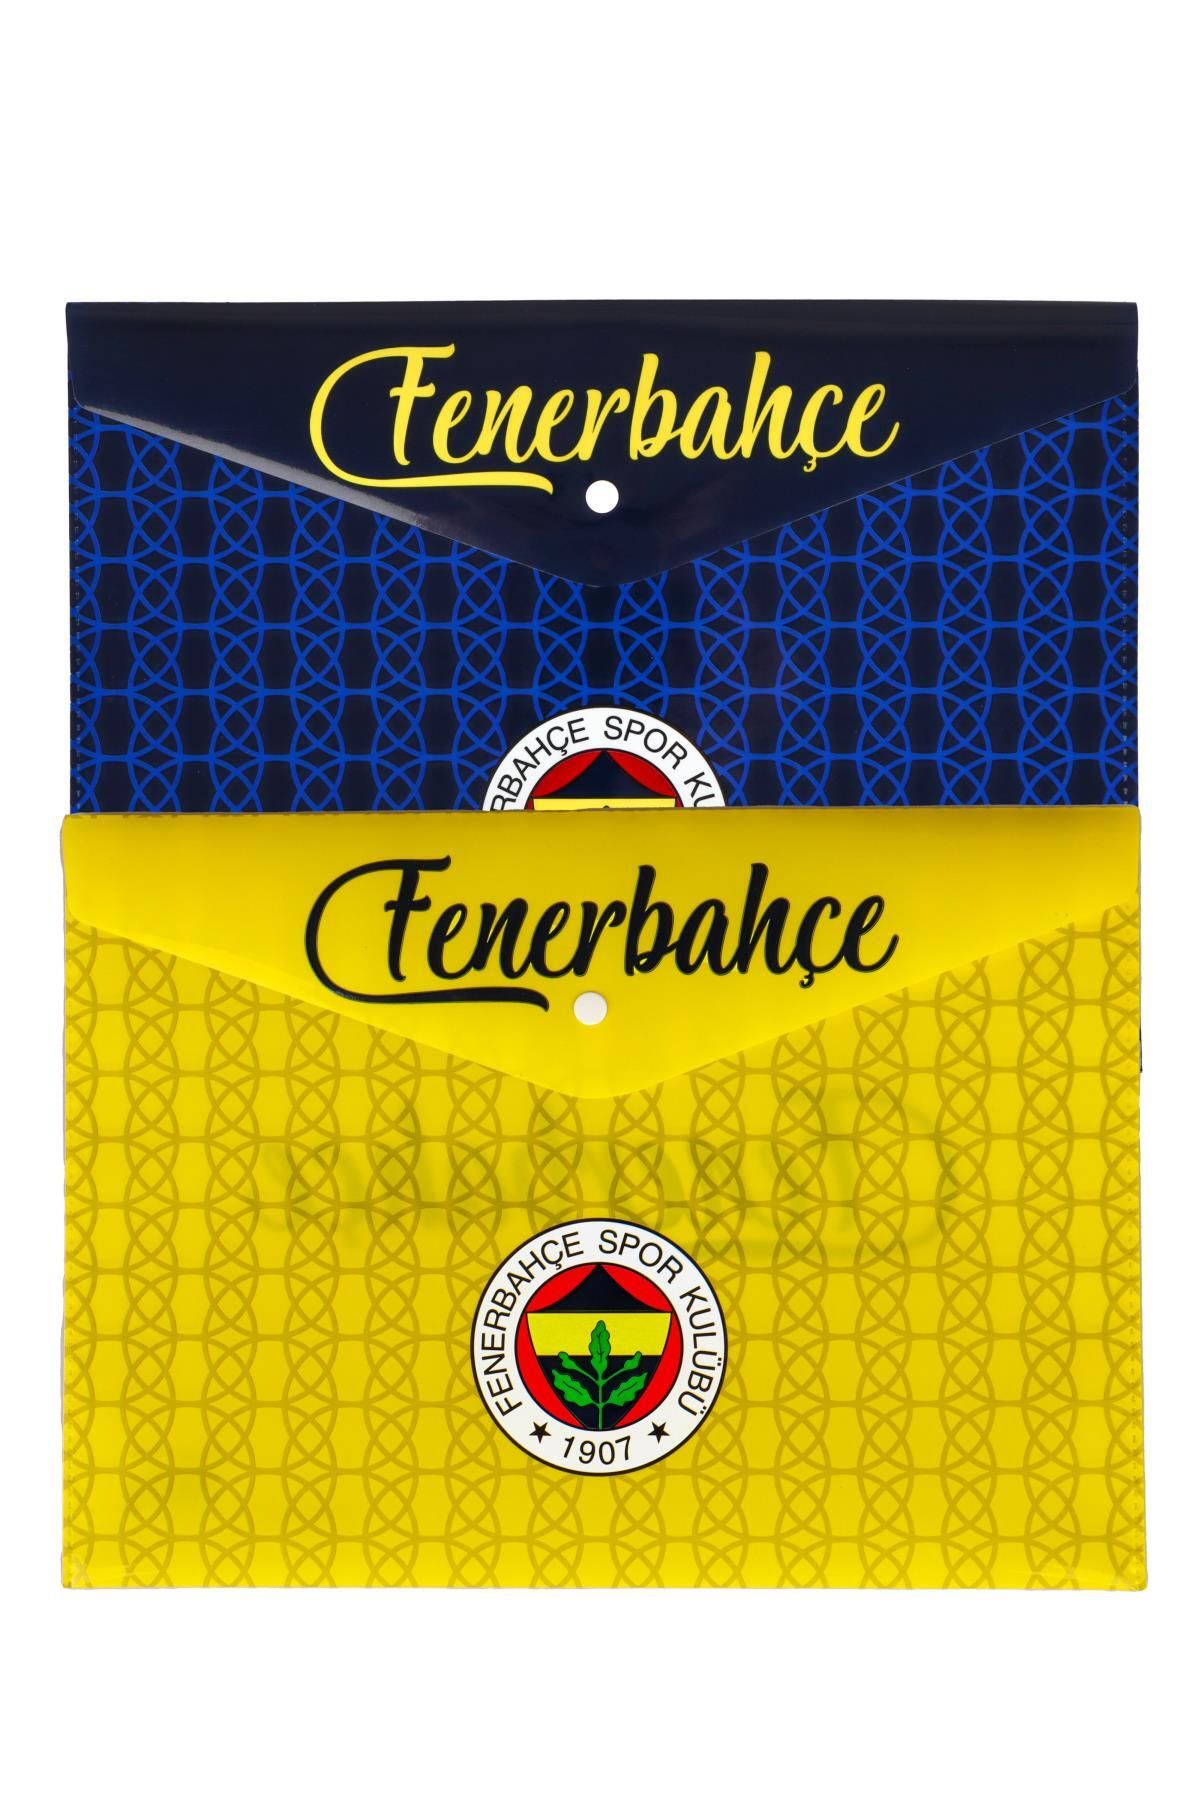 Fenerbahçe YENİ SEZON LİSANSLI FENERBAHÇE 2'Lİ ÇITÇITLI DOSYA